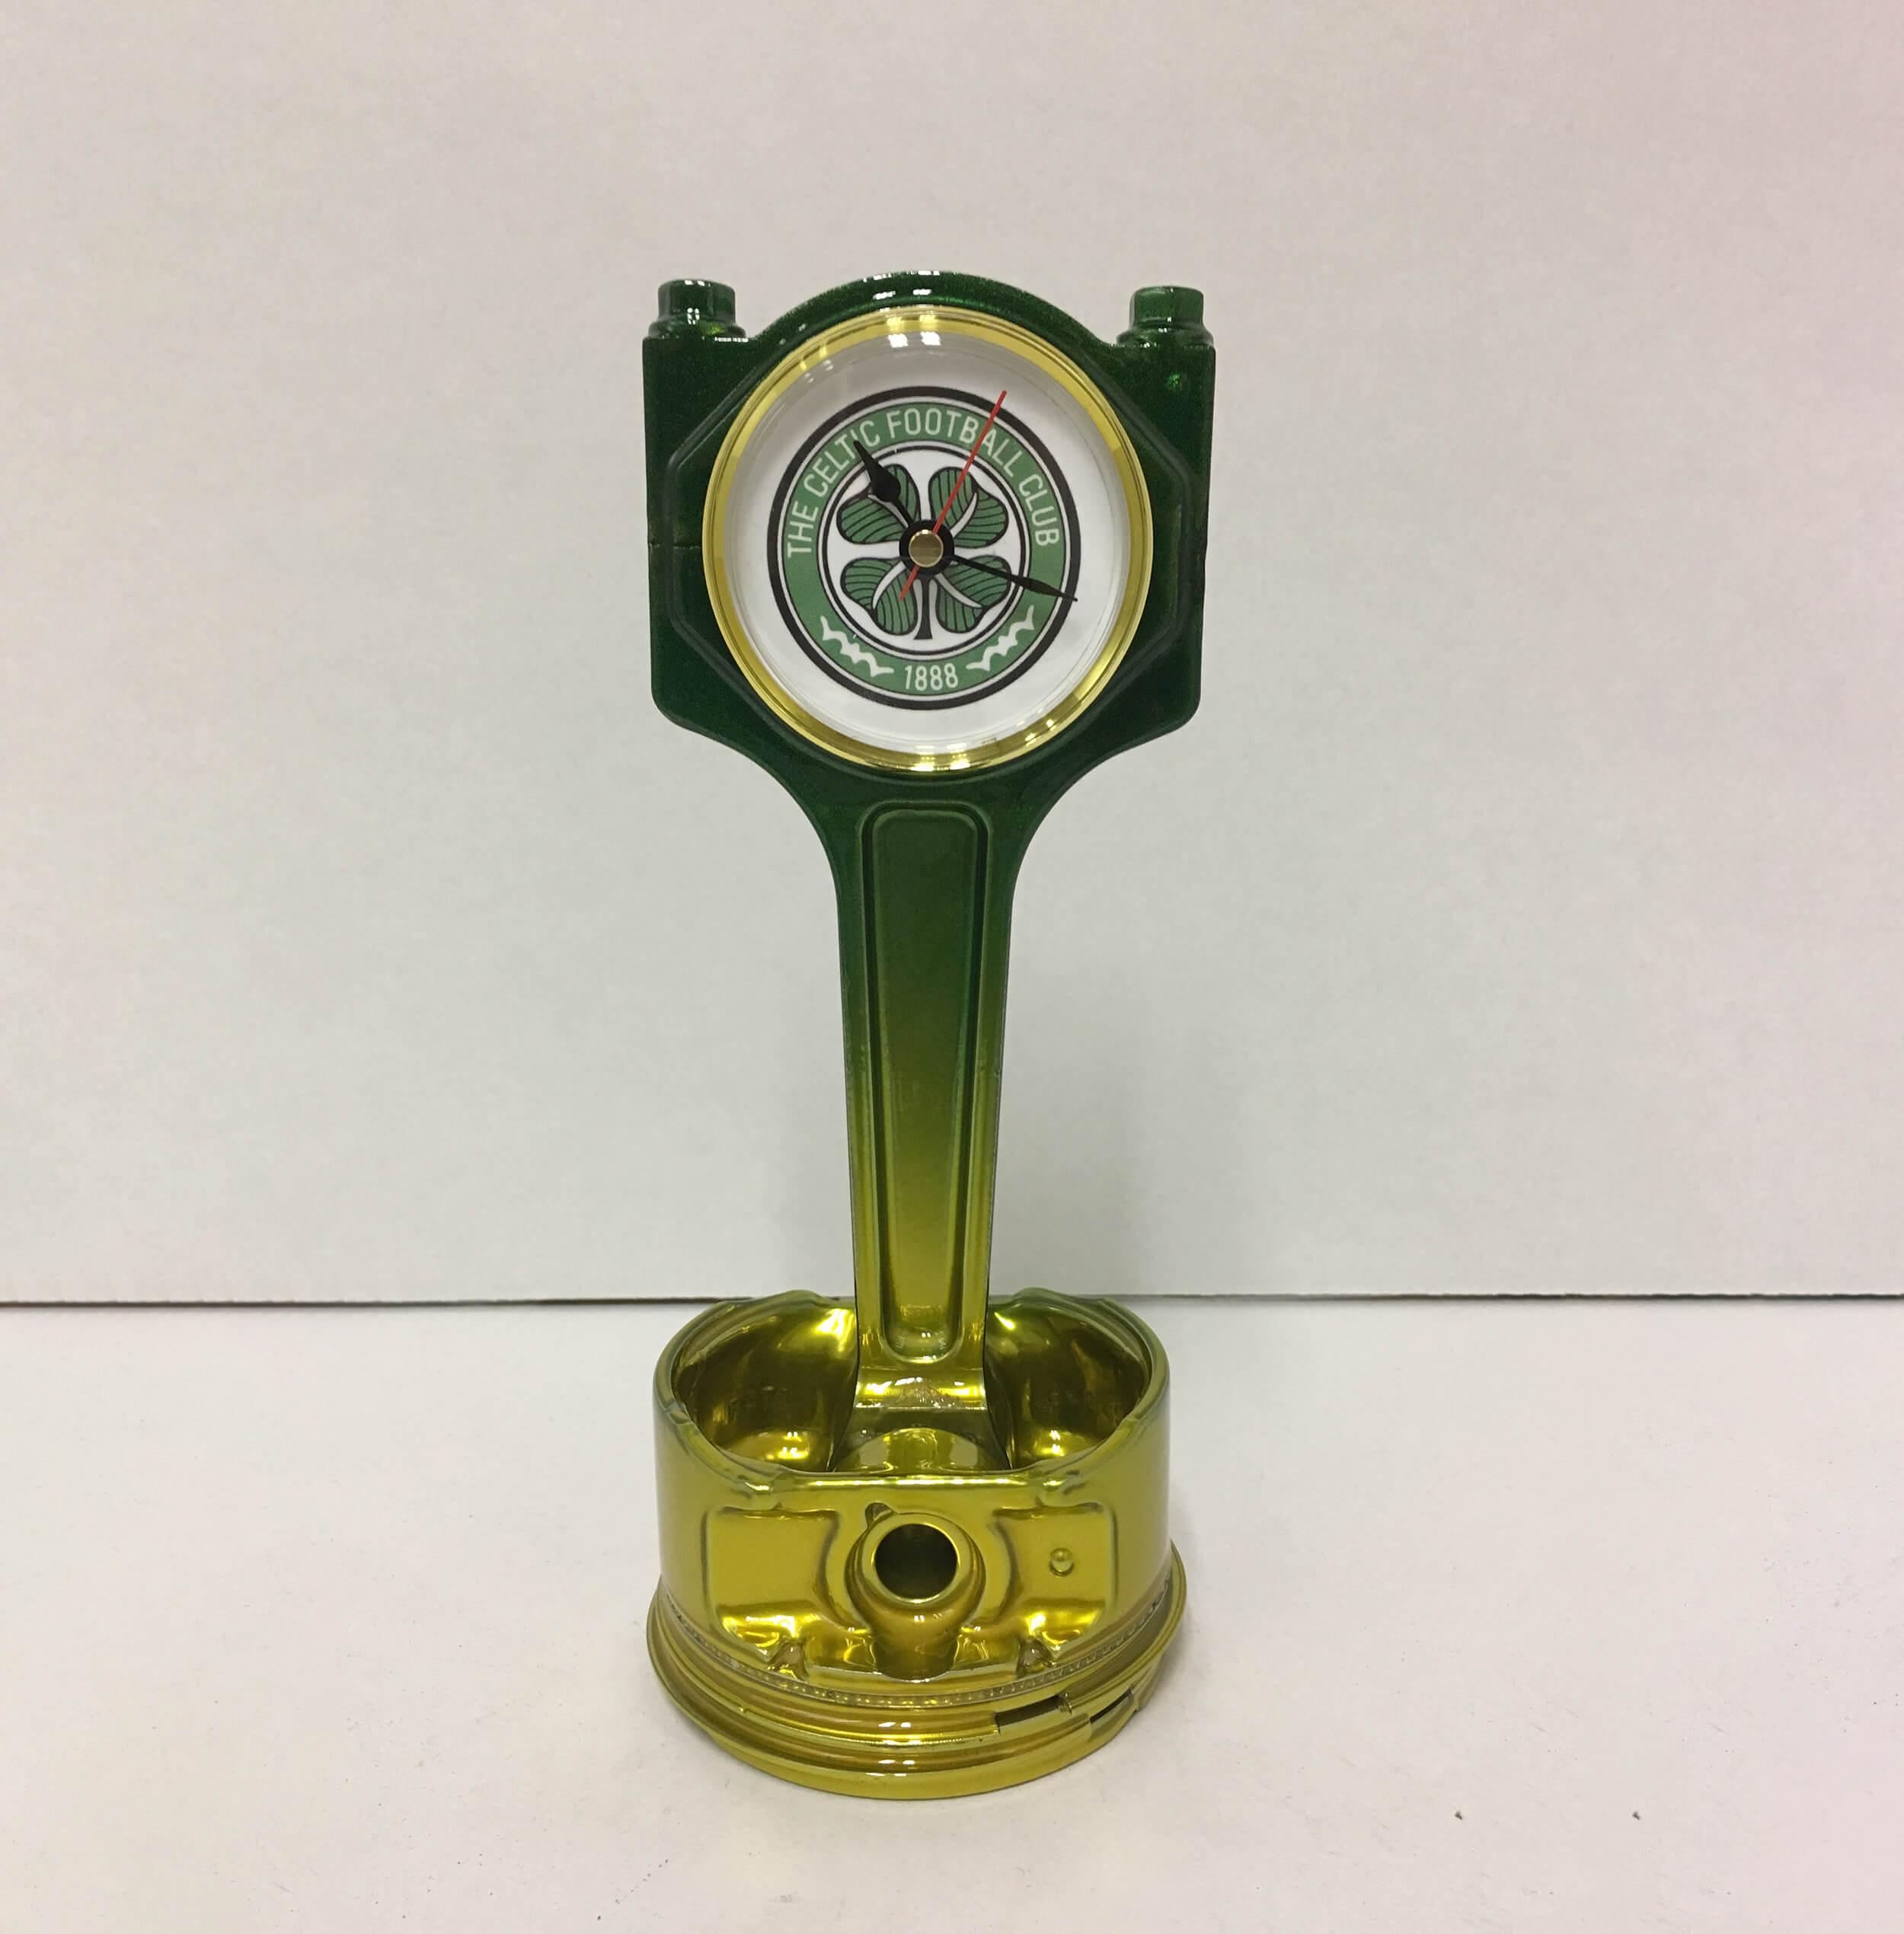 Product Celtic Piston Clock Gold & Green - Tallaght Powder Coating image